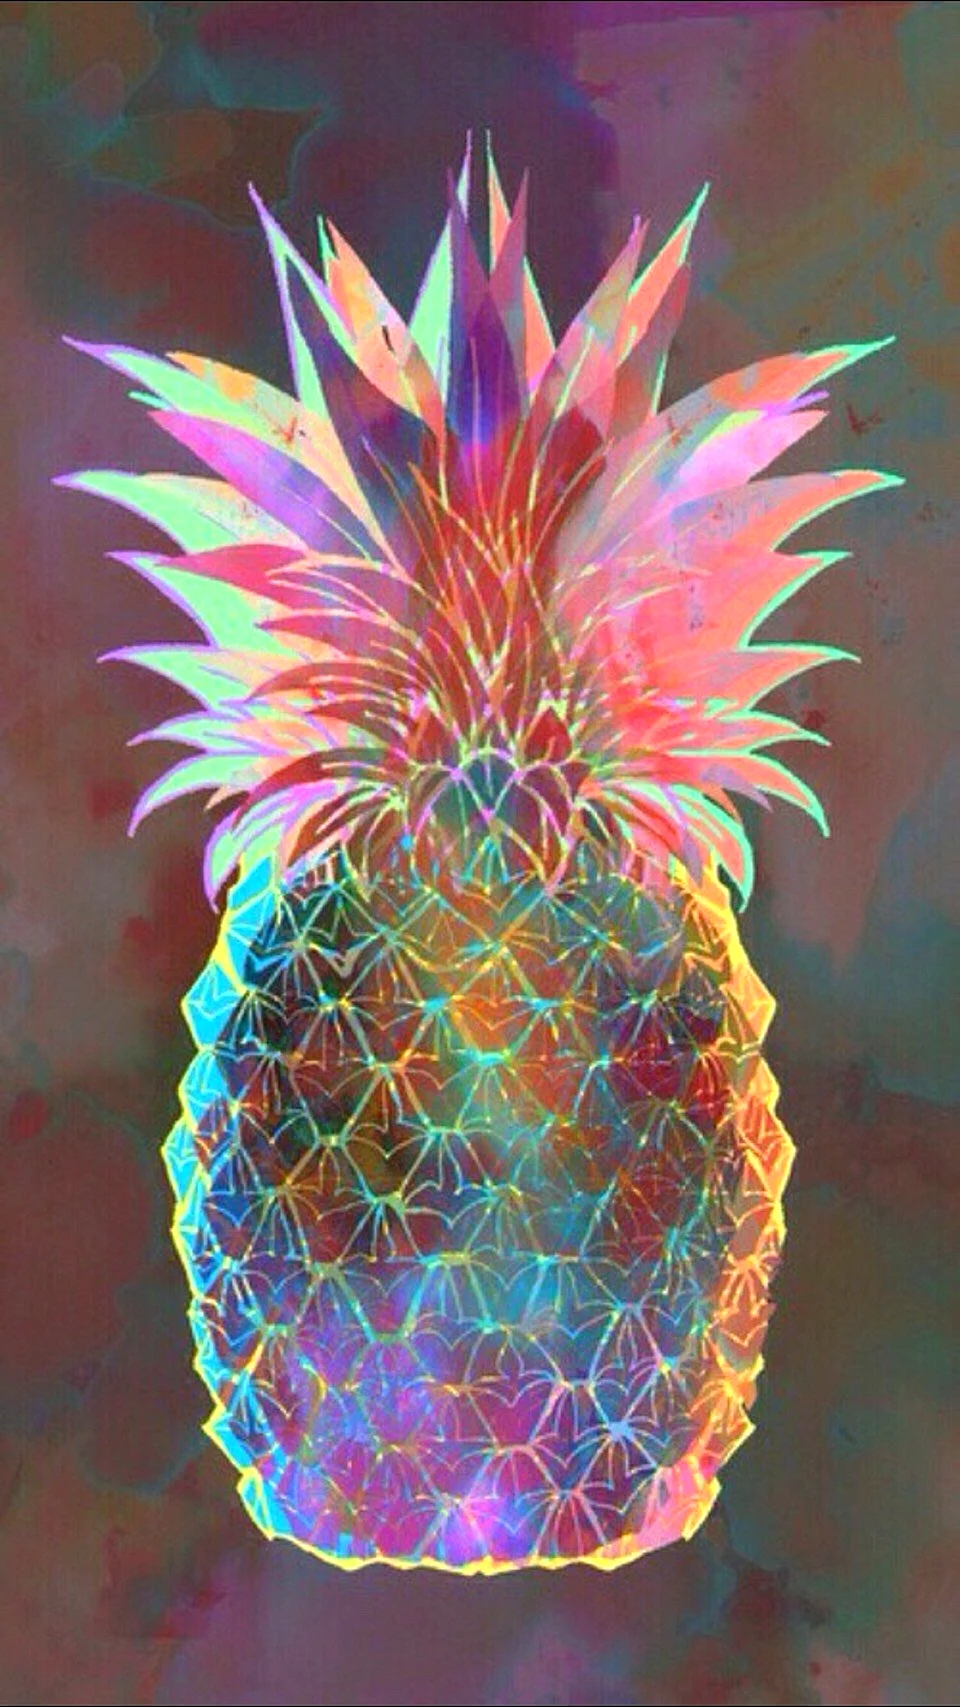 Pineapple Express Art Wallpaper For iPhone